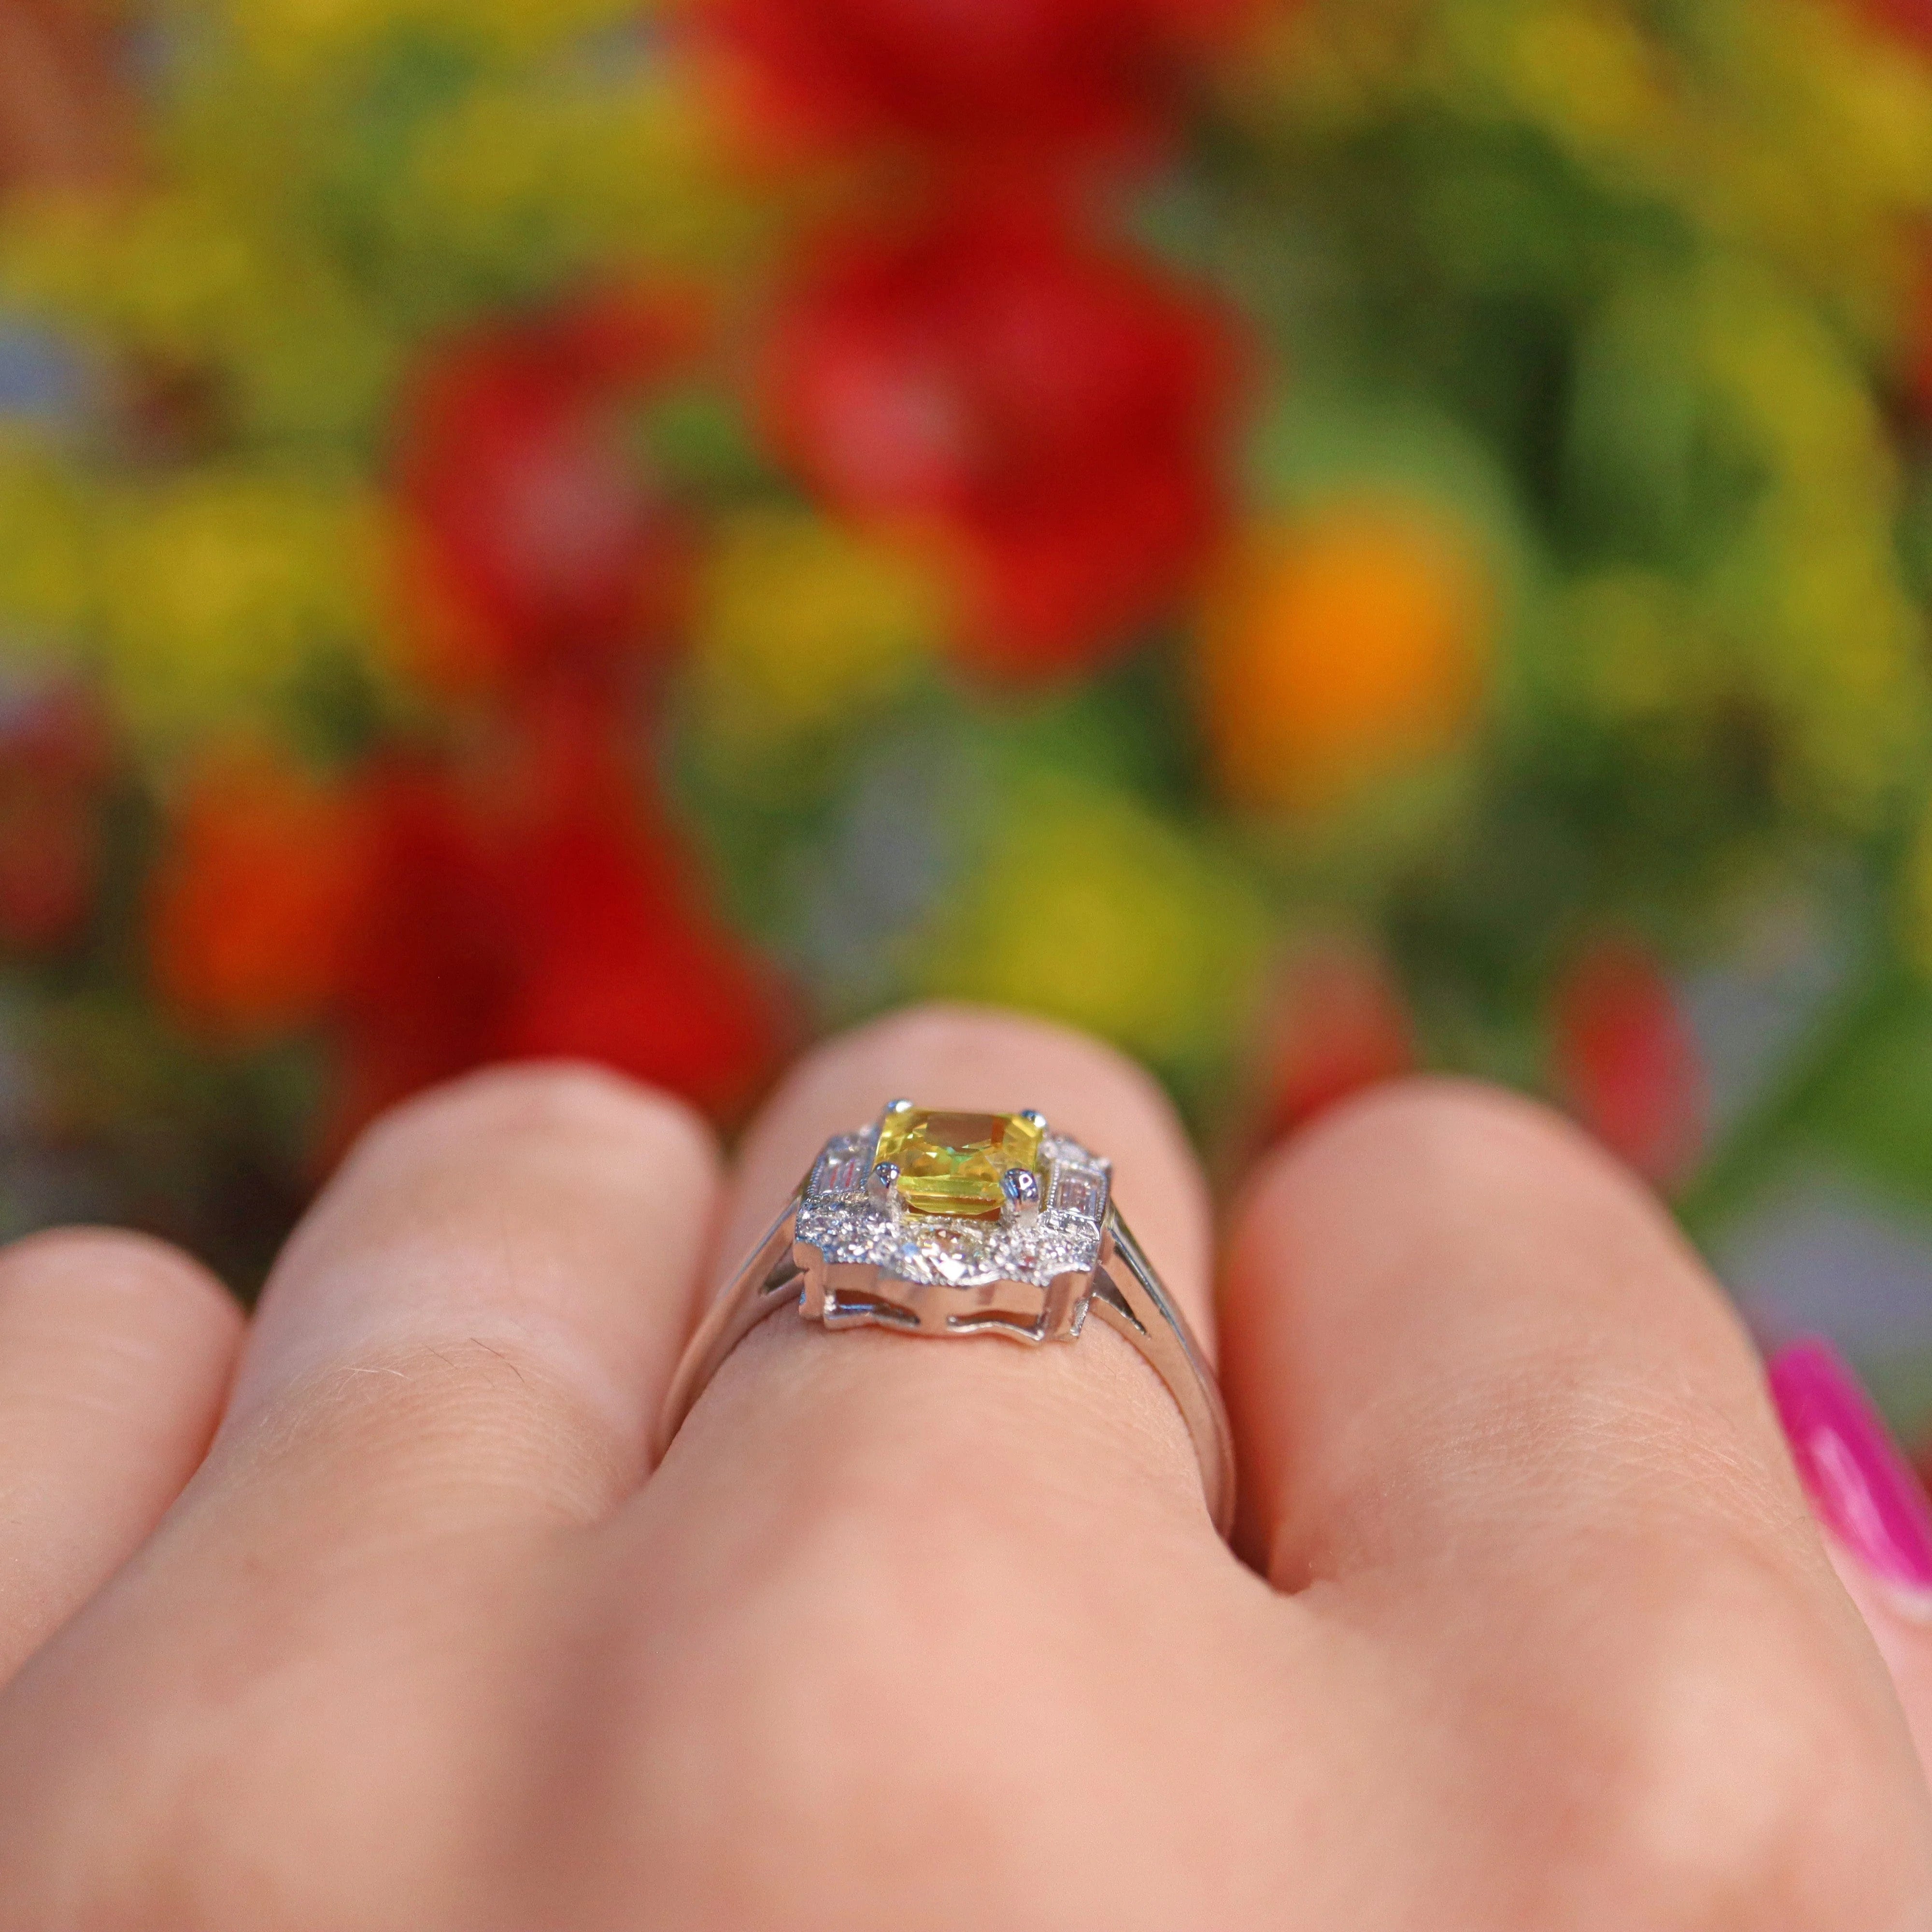 Ellibelle Jewellery Art Deco Style Yellow Sapphire & Diamond Platinum Panel Ring